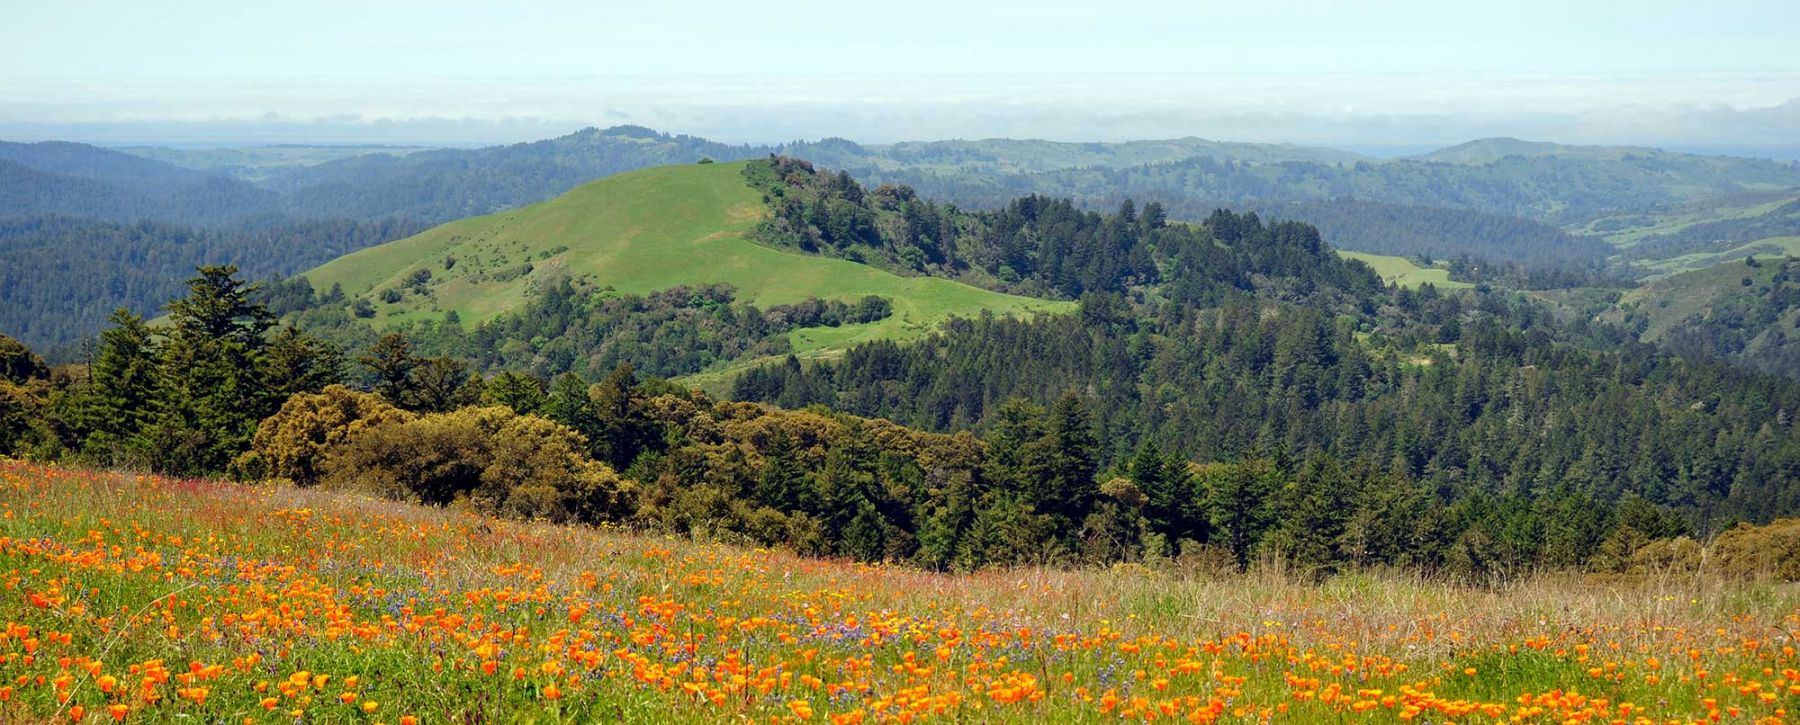 California Poppies in Santa Cruz Mountains